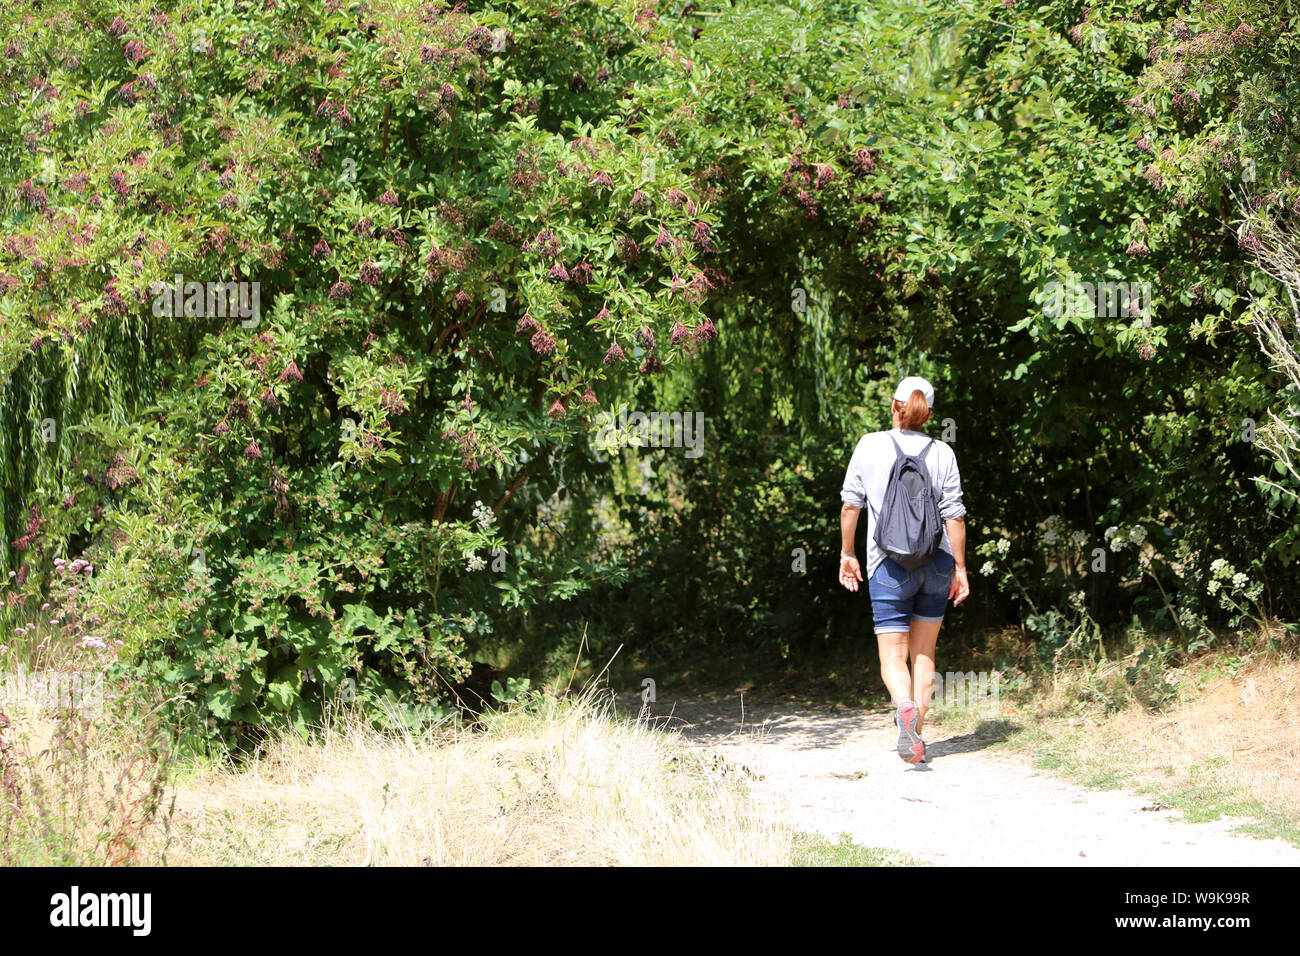 Marcheuse sur un sentier en forêt. / Walking on a path in the forest. Stock Photo